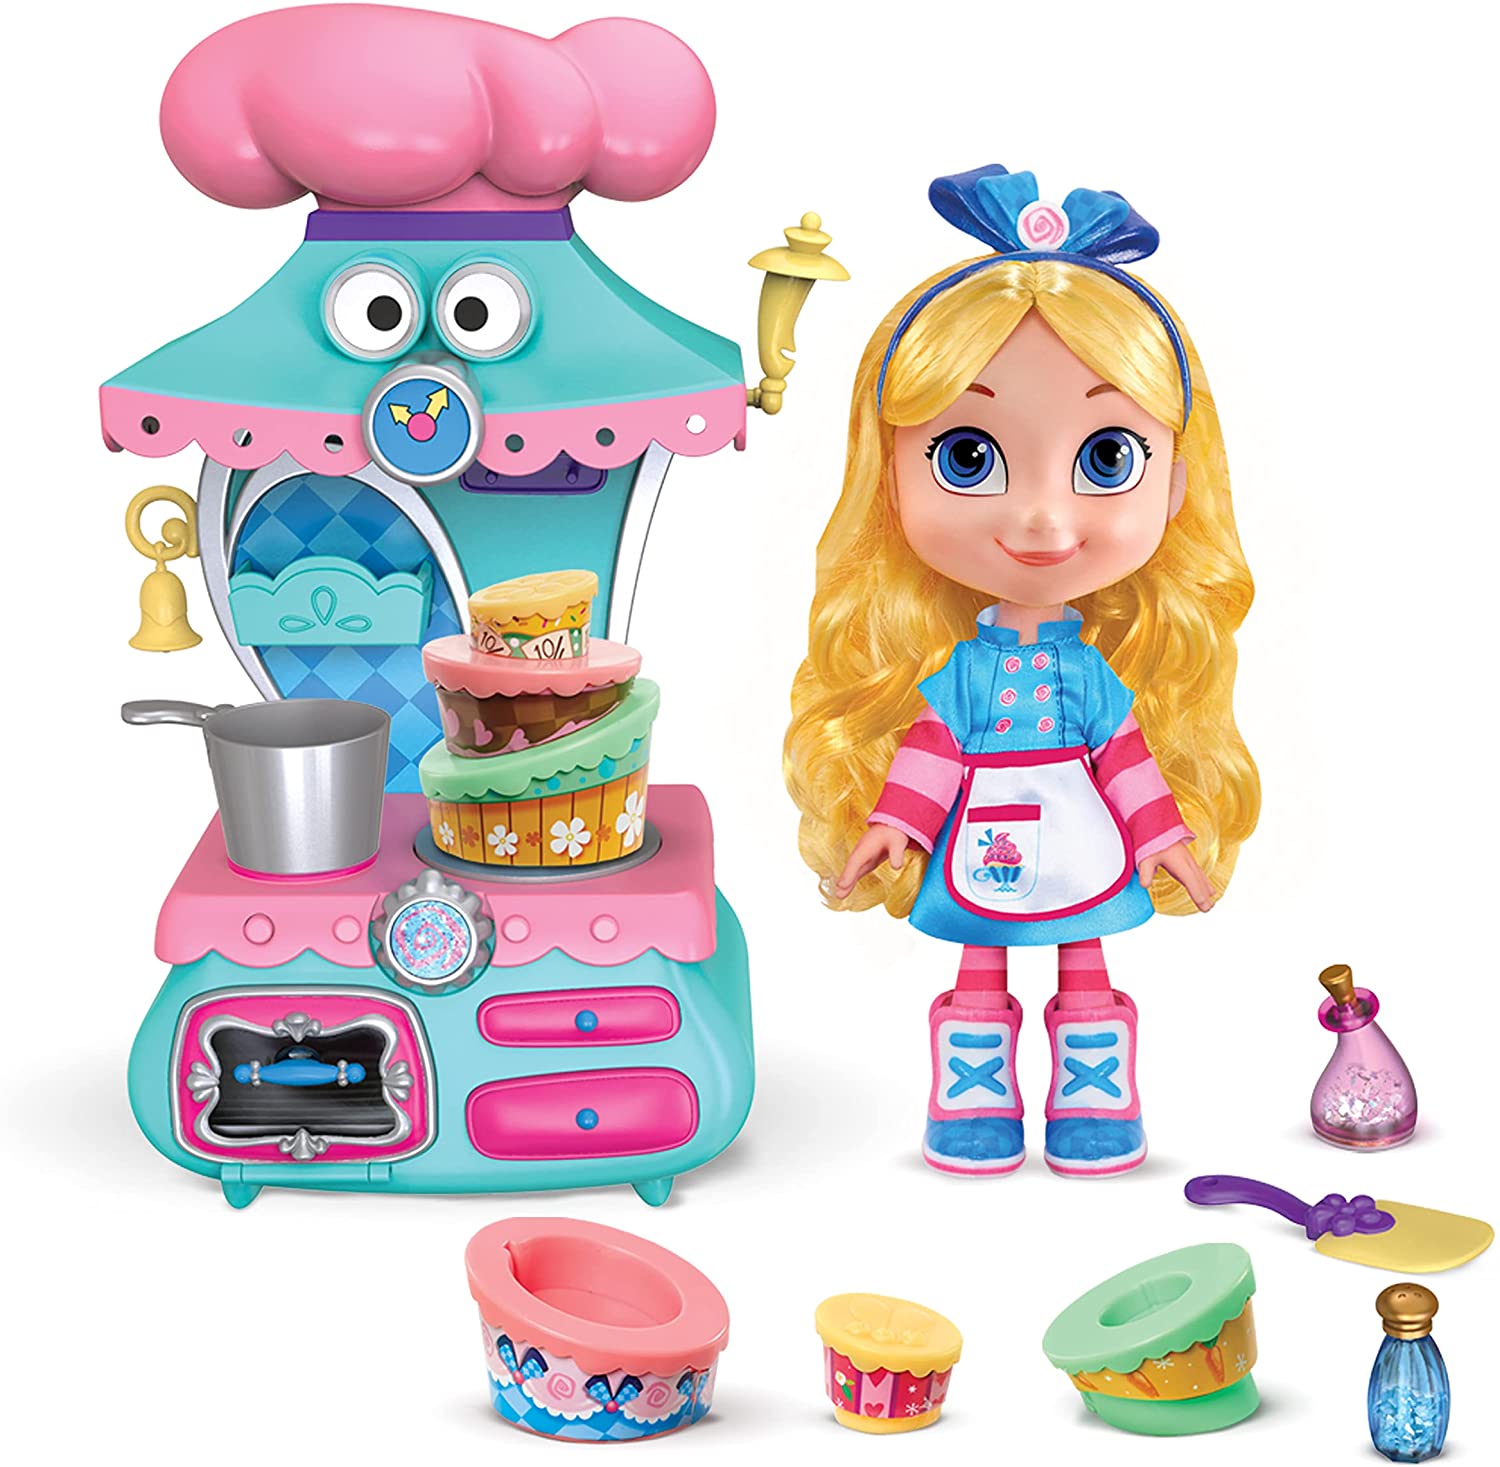 Name: Alice Wonderland Bakery Year: 2022 Brand: Just Play Theme: Alice in  Wonderland #disney #wonderland #alice #justplay #dolls #figures